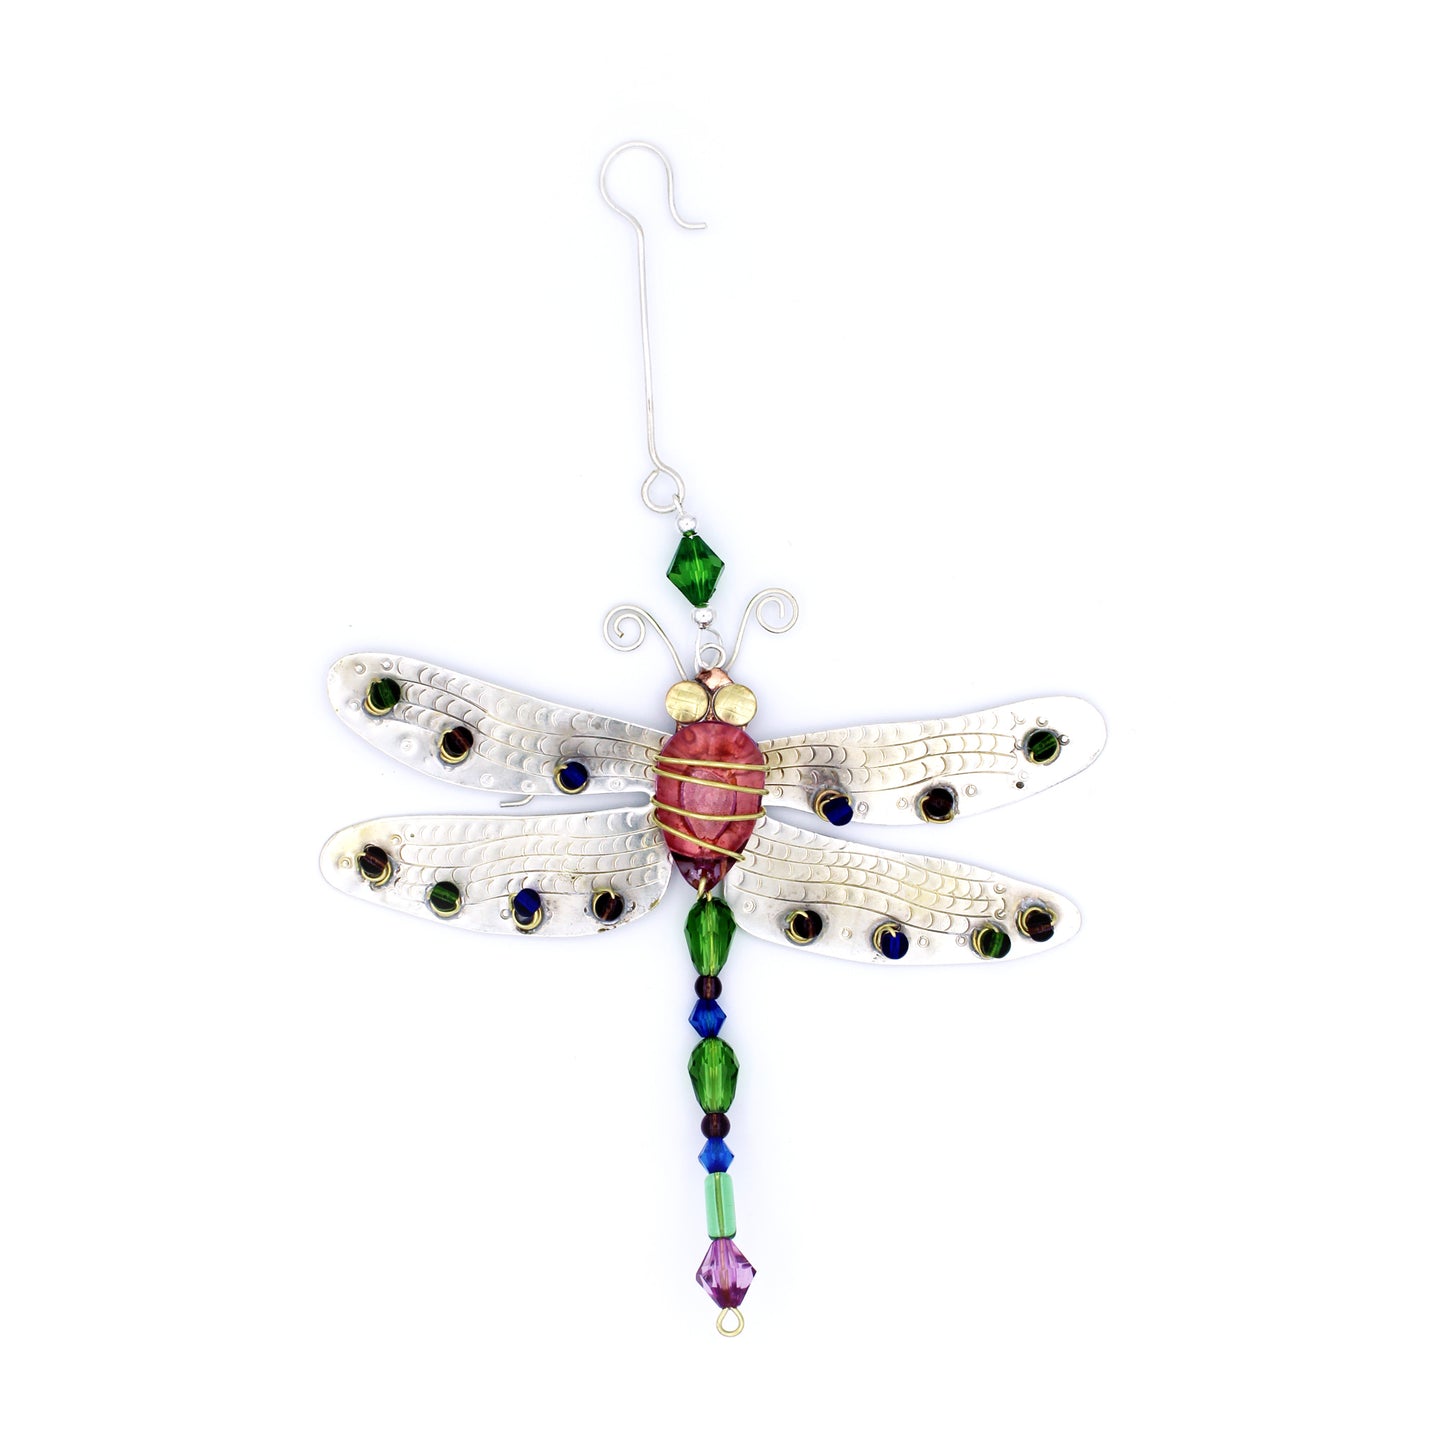 Handmade Metal Ornament: "Tiffany" Dragonfly